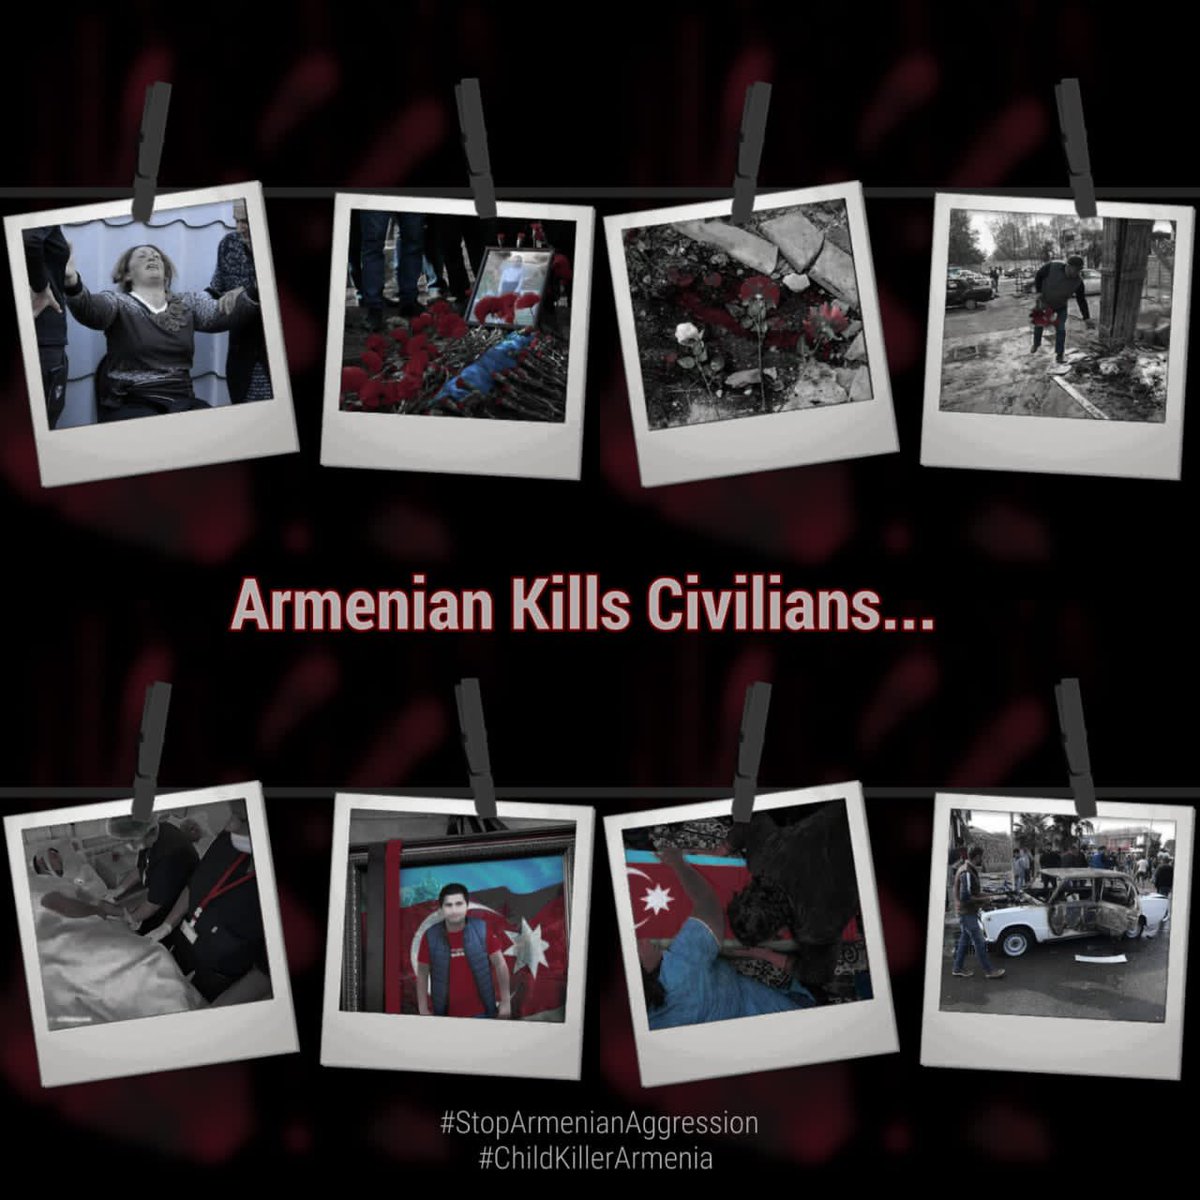 Armenian kills civilians...
#StopArmenianAggression
#StopArmenianOccupation
#DontBelieveArmenia
#KarabakhisAzerbaijan
#Ganja #Bardacity